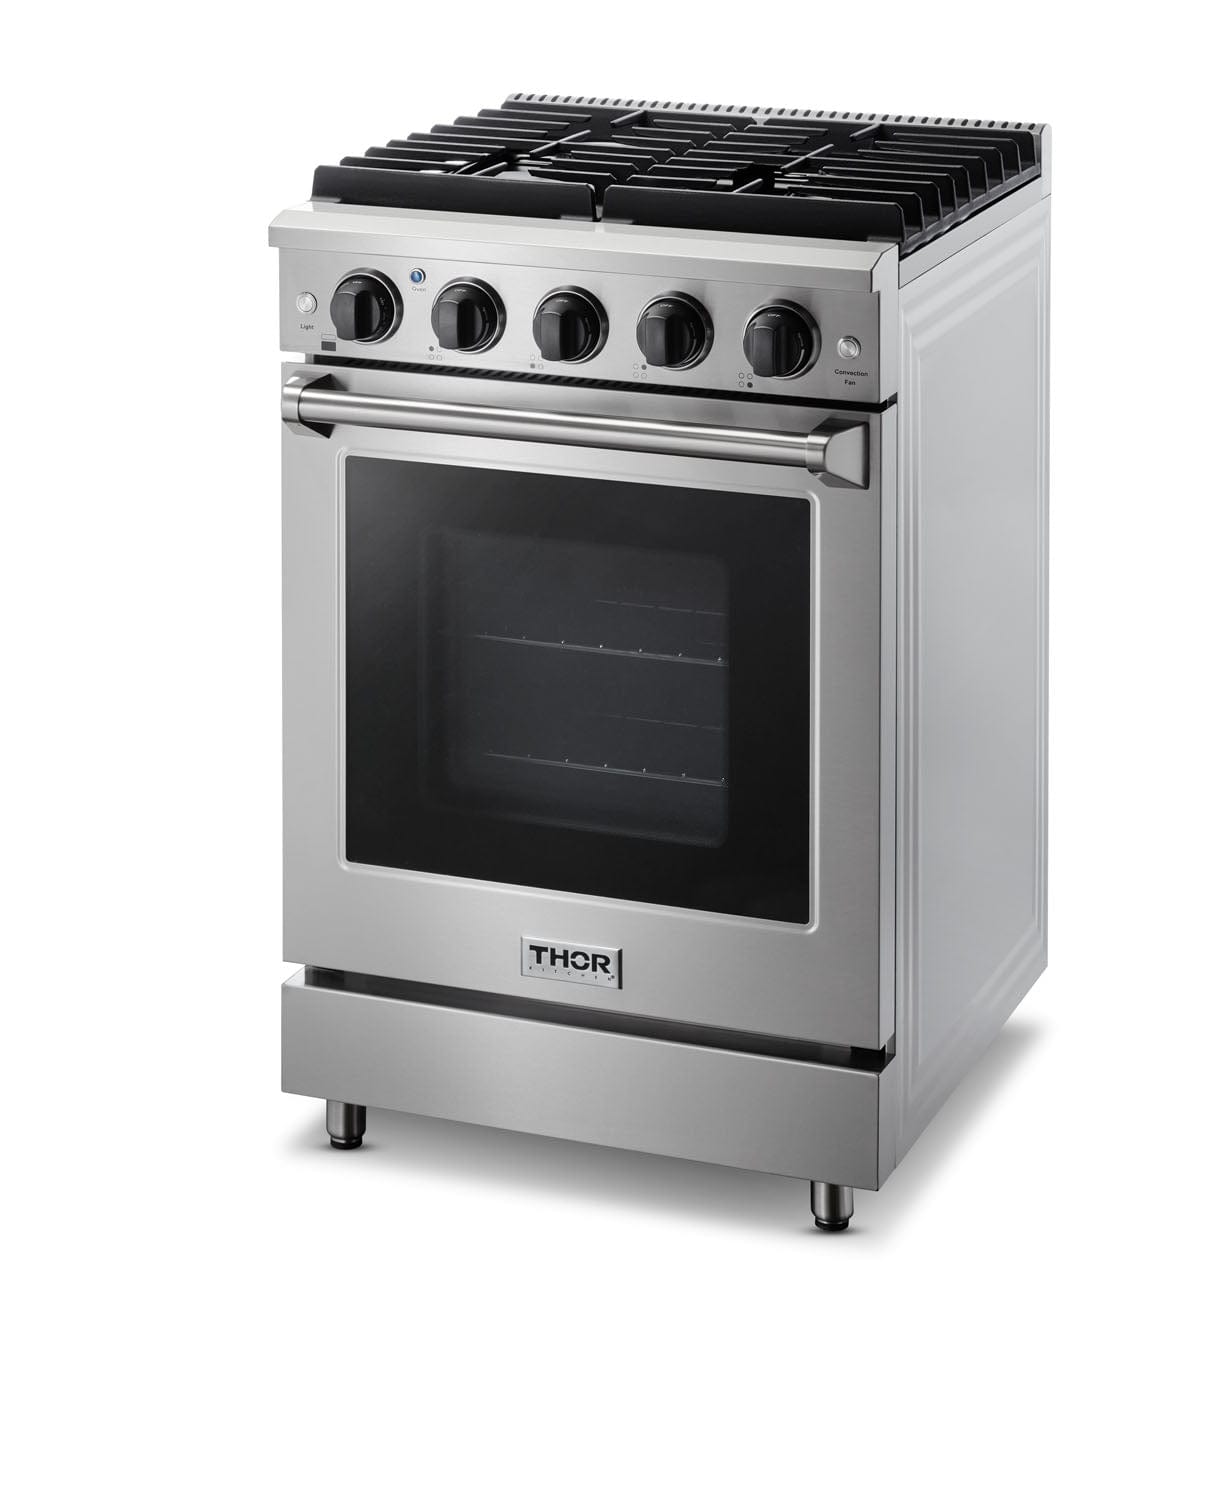 Thor Kitchen 24 in. Professional Gas Range in Stainless Steel LRG2401U Ranges LRG2401U Luxury Appliances Direct